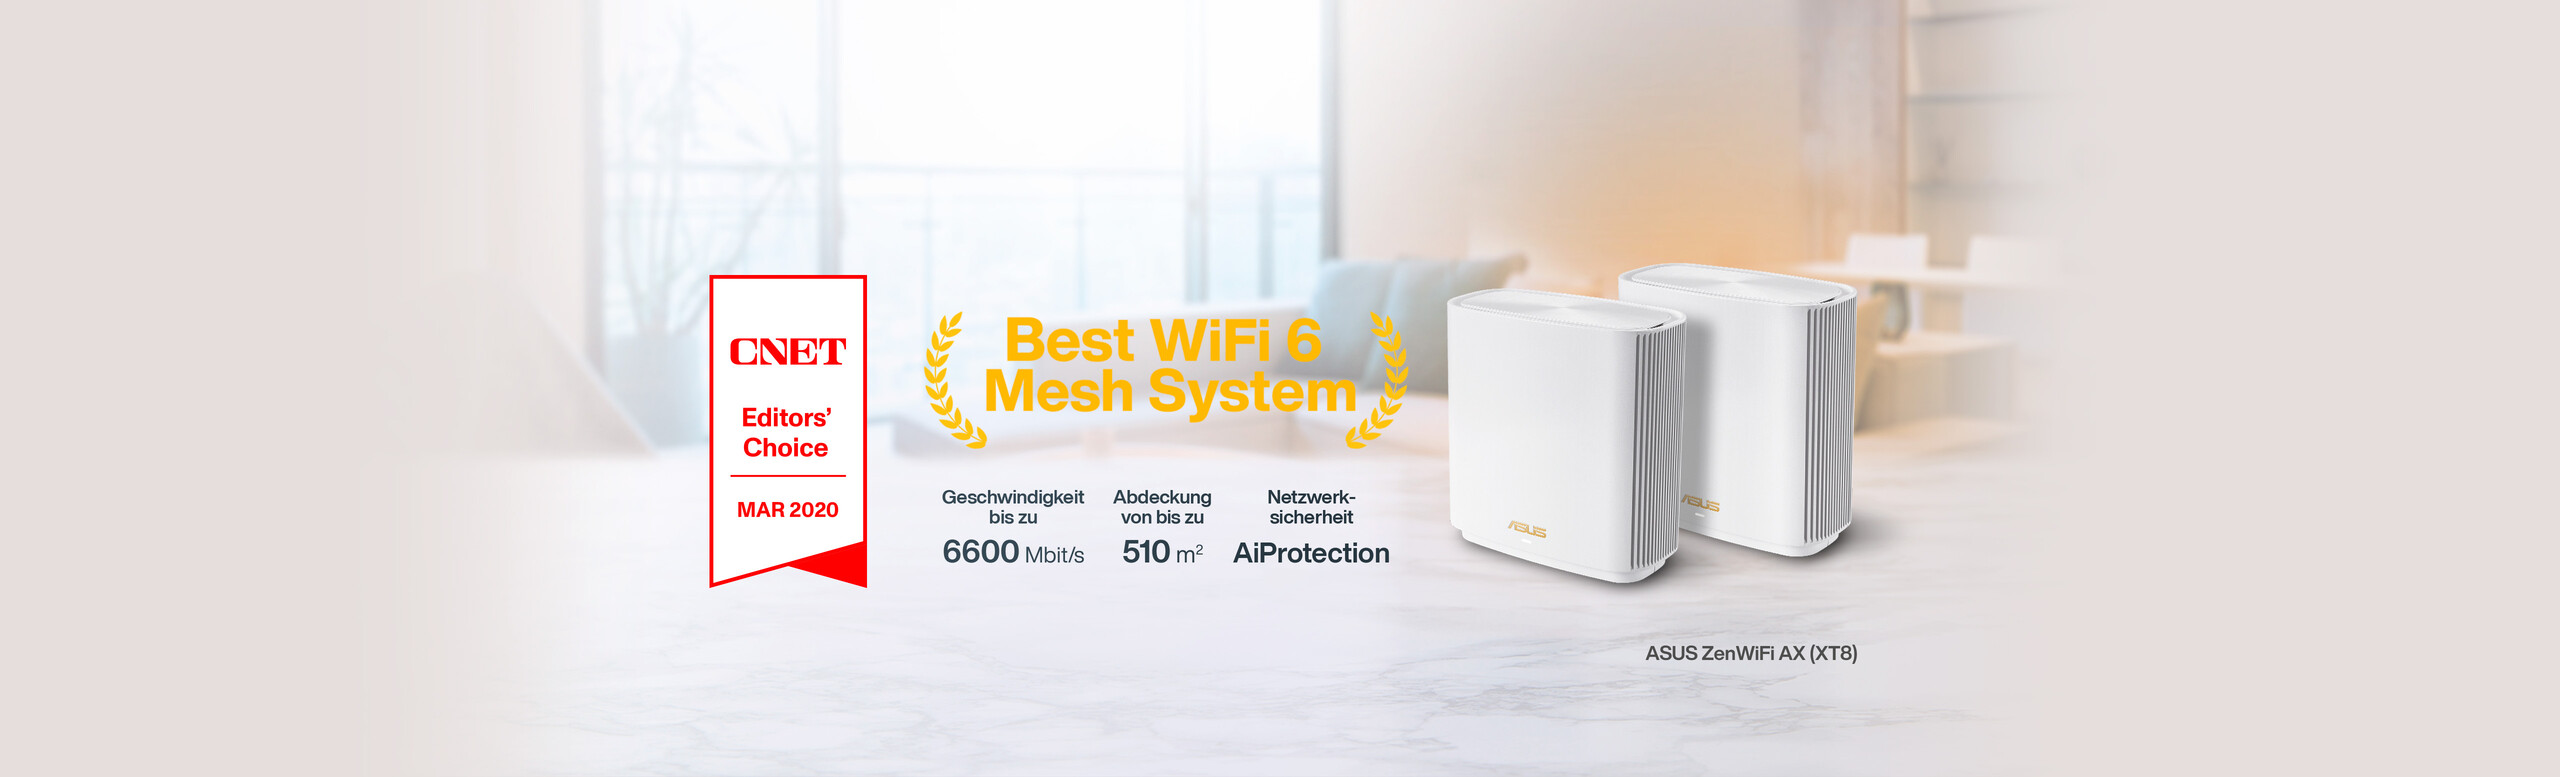 Best WiFi 6 Mesh System